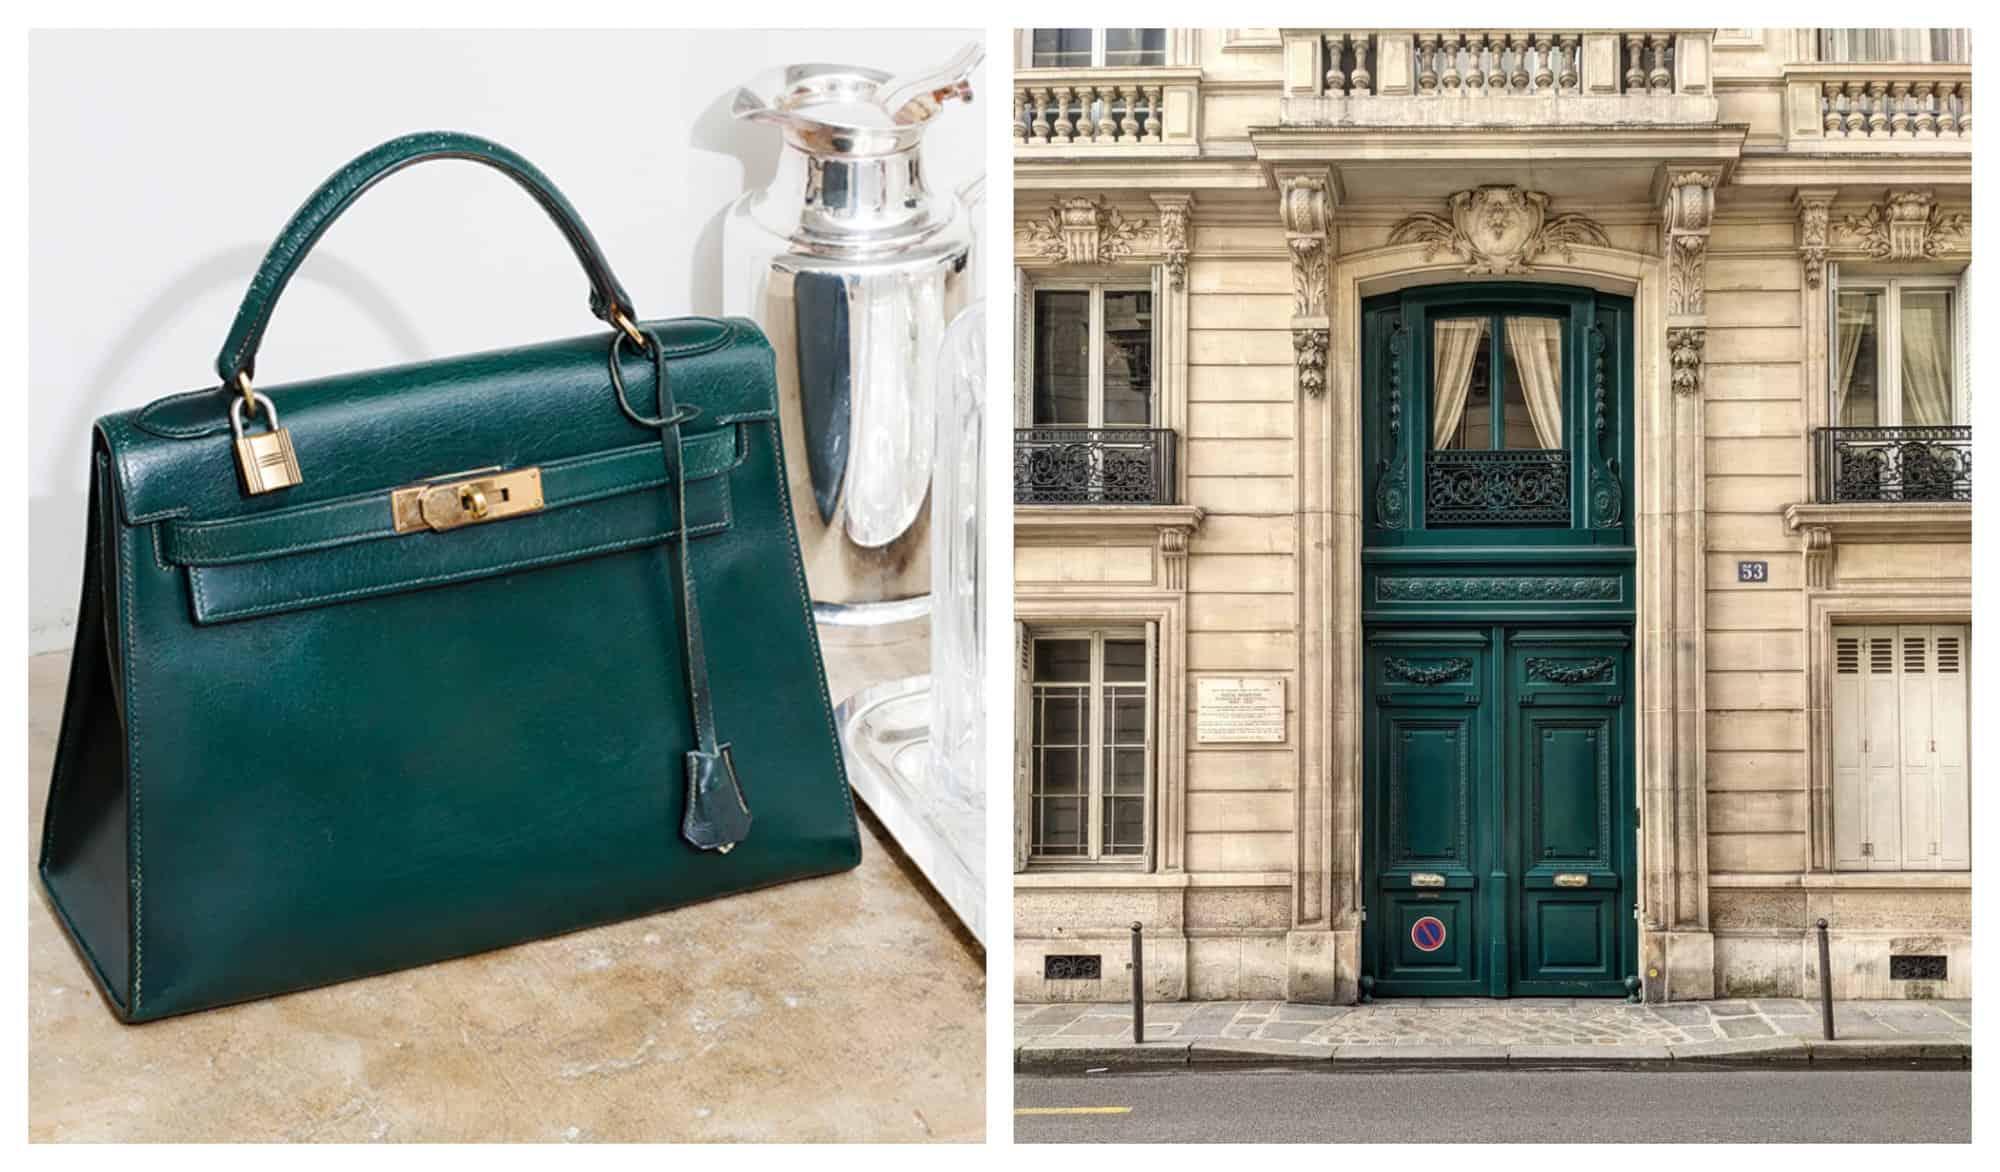 Left: A photo of a green Hermès Birkin bag. Right: A photo of a Parisian building with a green door.